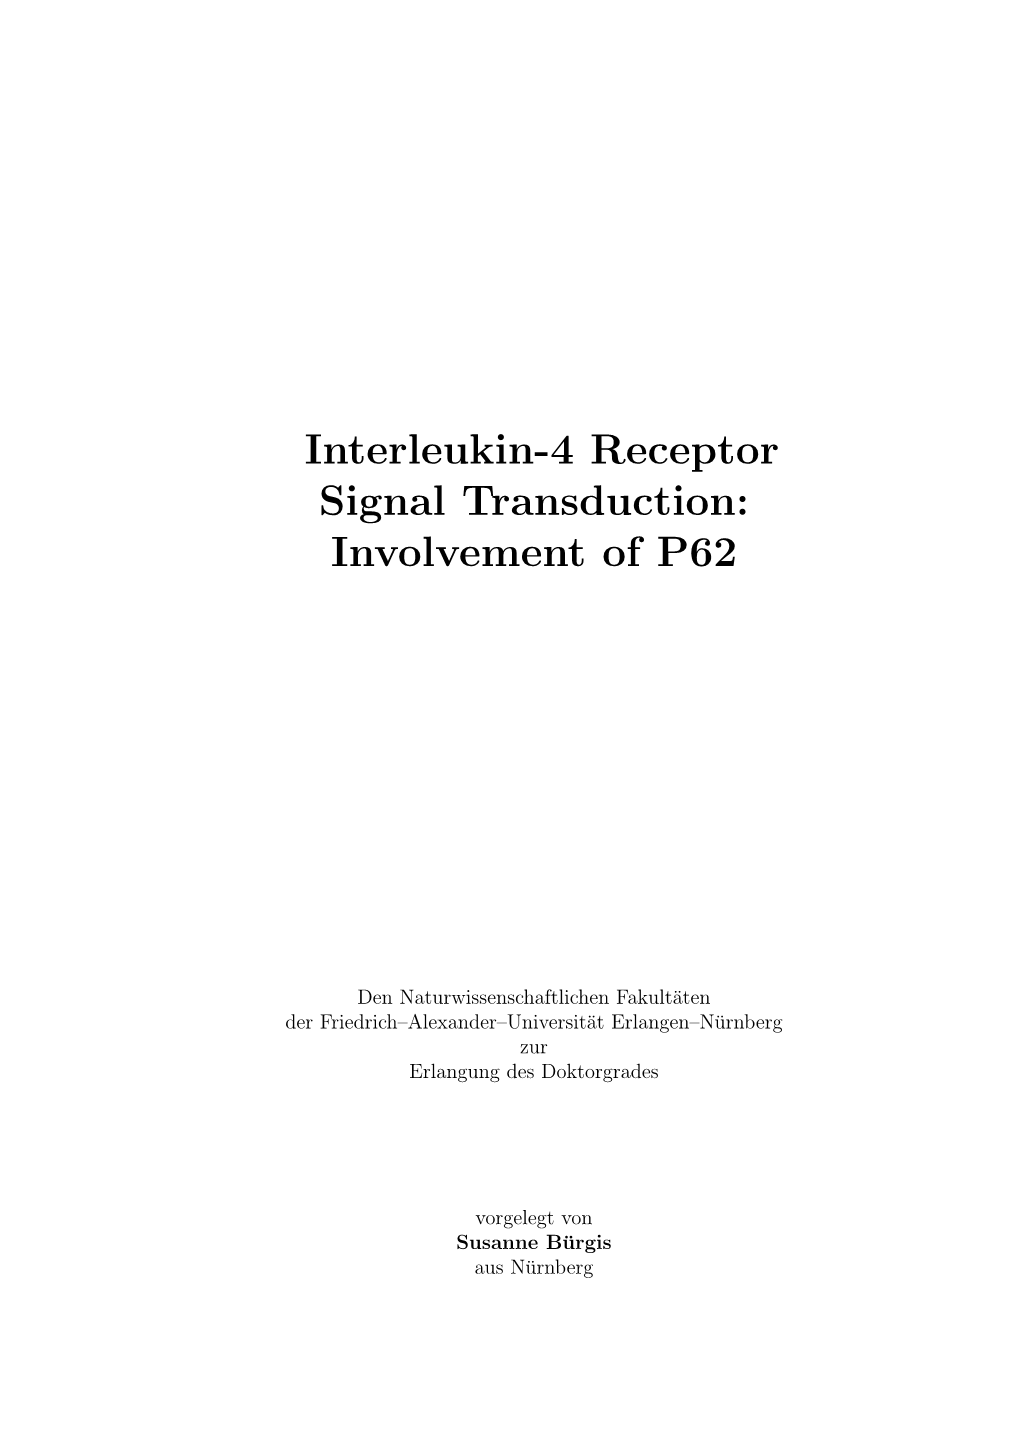 Interleukin-4 Receptor Signal Transduction: Involvement of P62